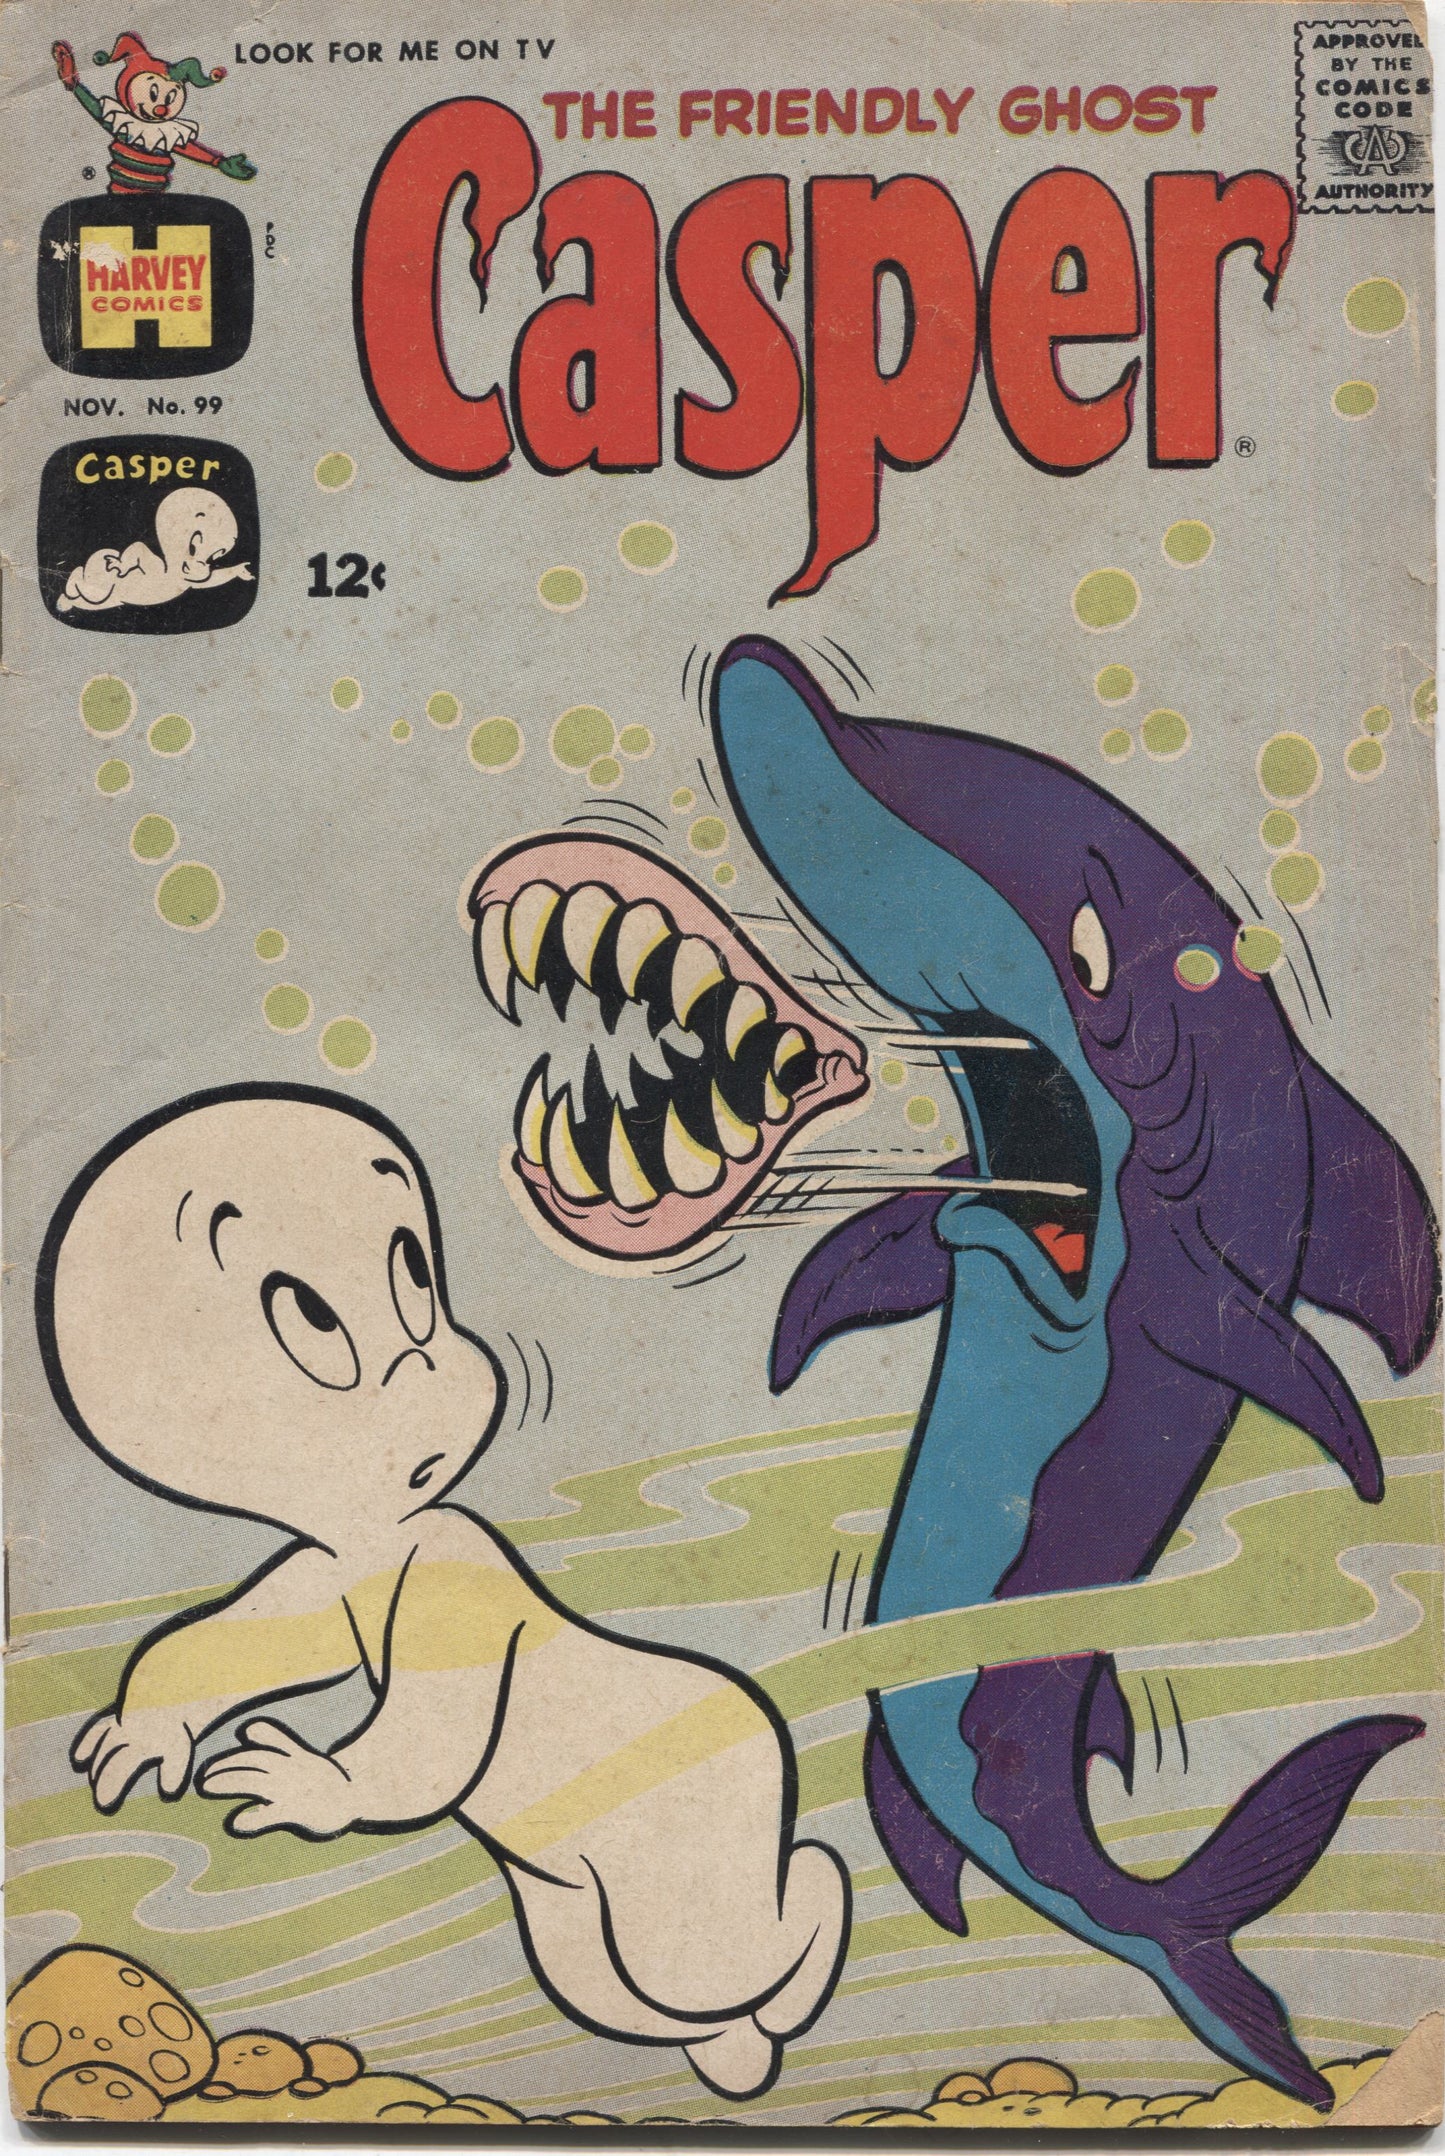 Casper the Friendly Ghost No. 99, Harvey Comics, November 1966